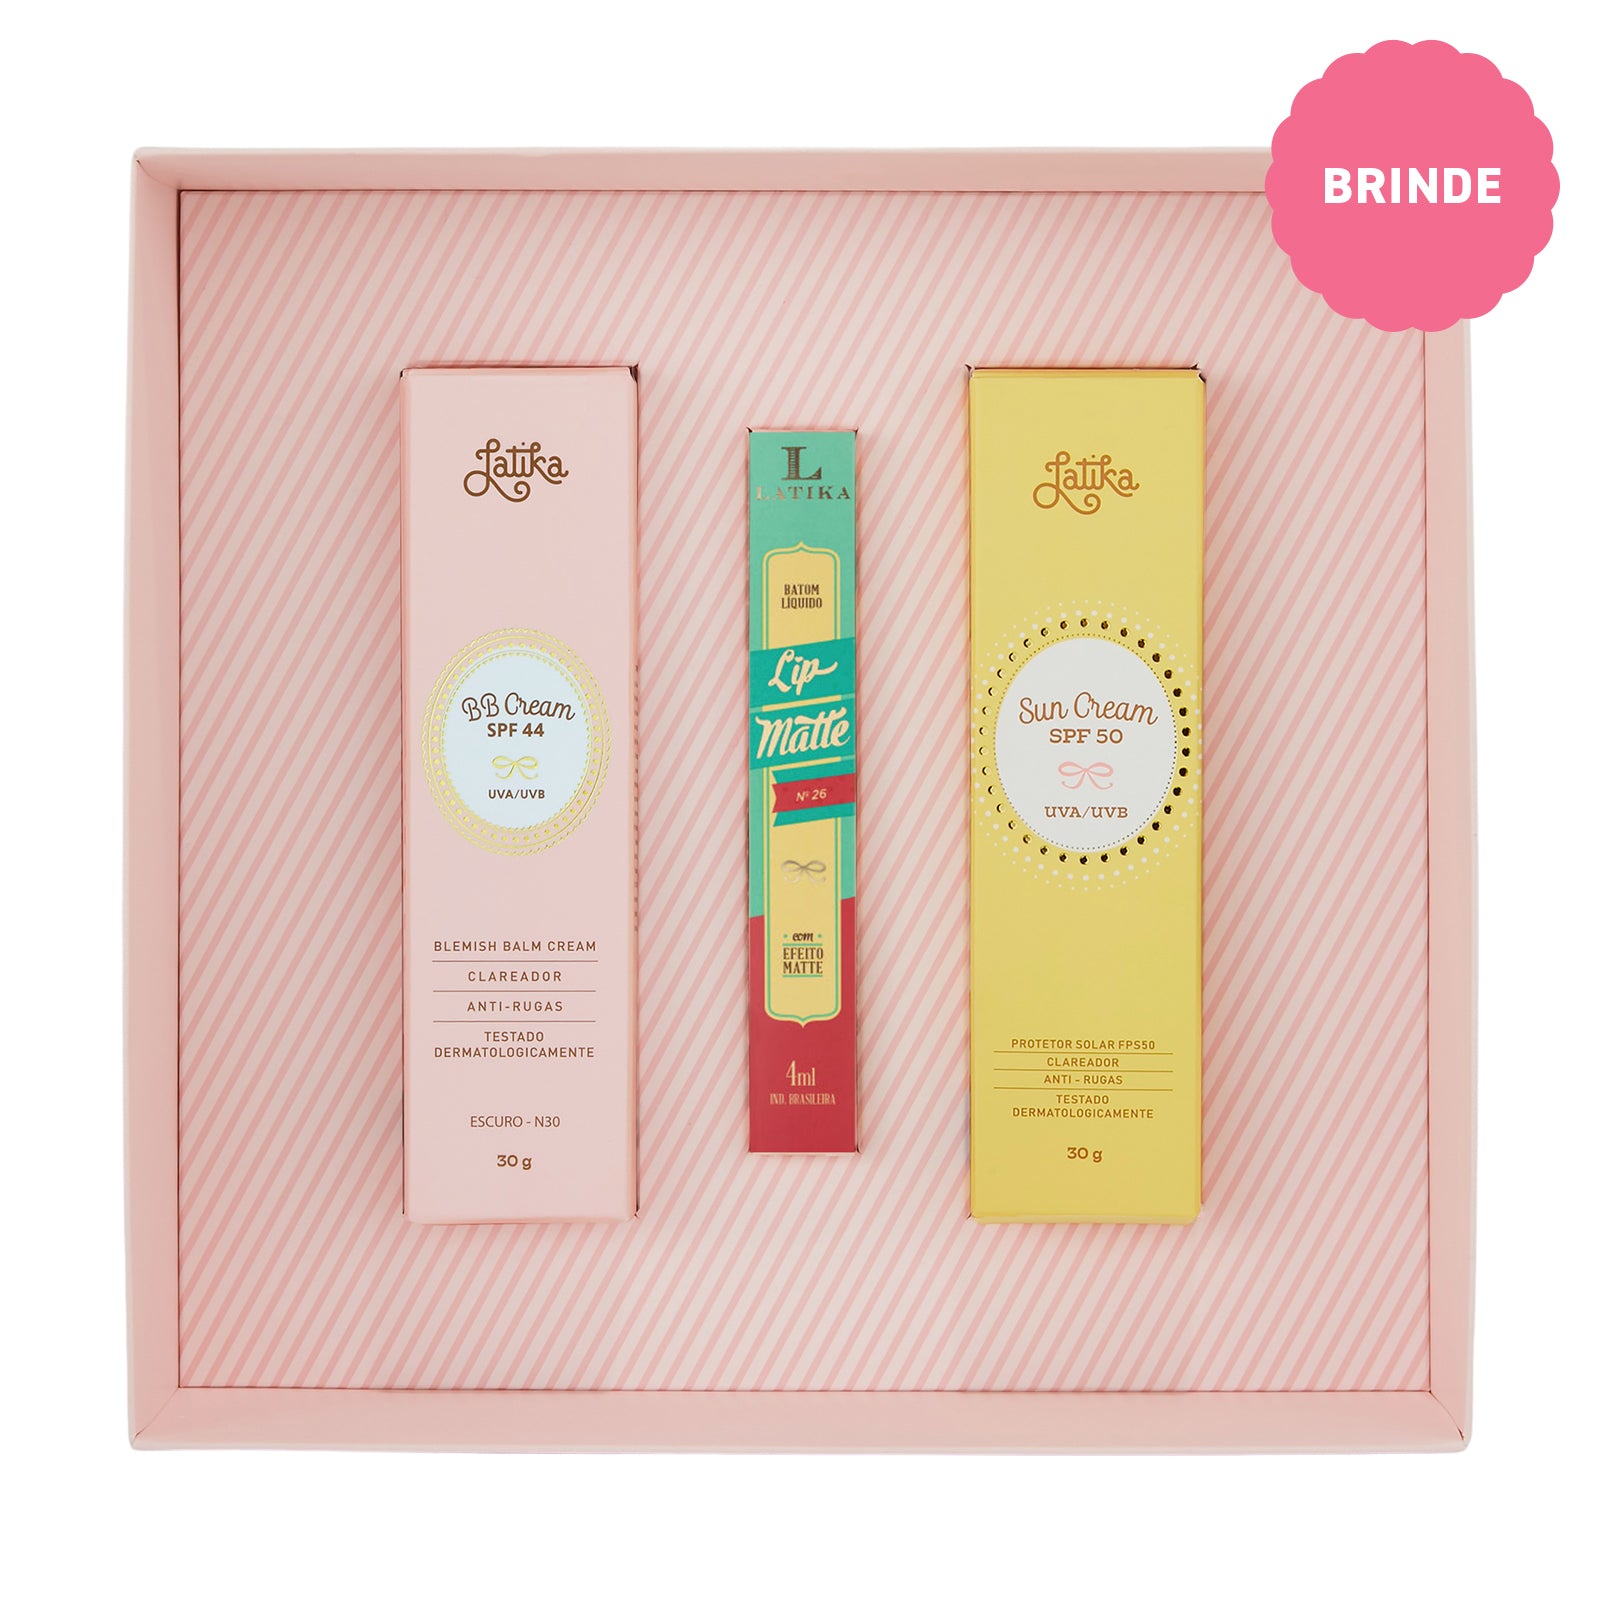 Sweet Box Edição Especial - BB Cream + Sun Cream + Brinde Lip Matte